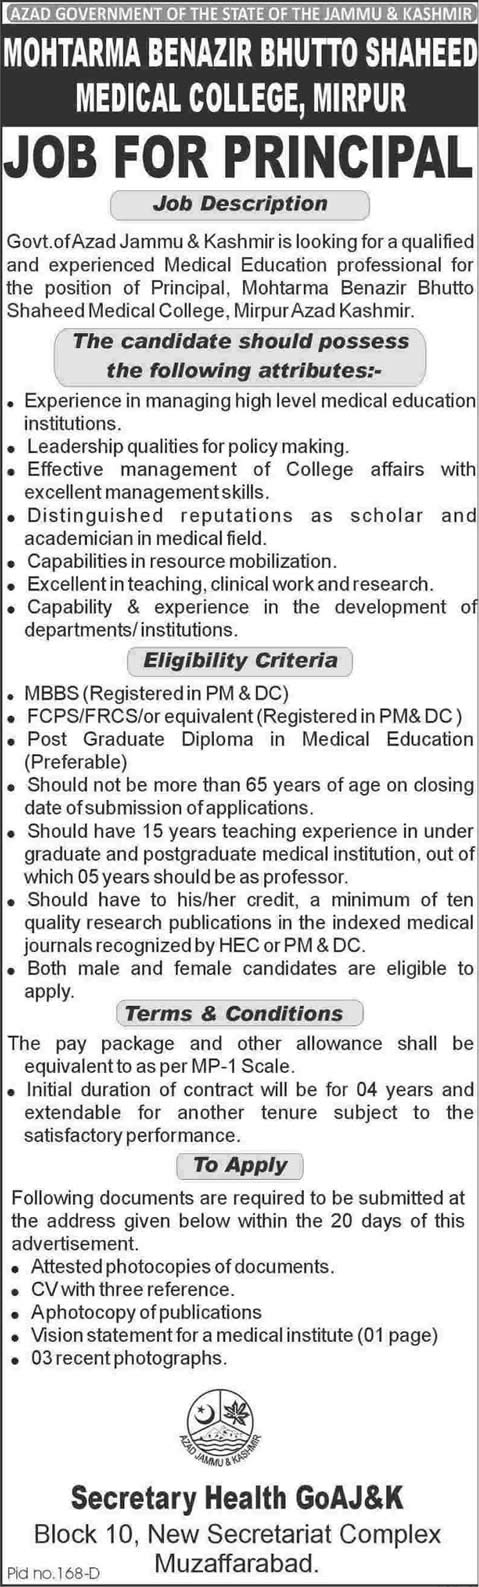 Principal Job at MBBS Medical College Mirpur AJK Jobs 2014 February